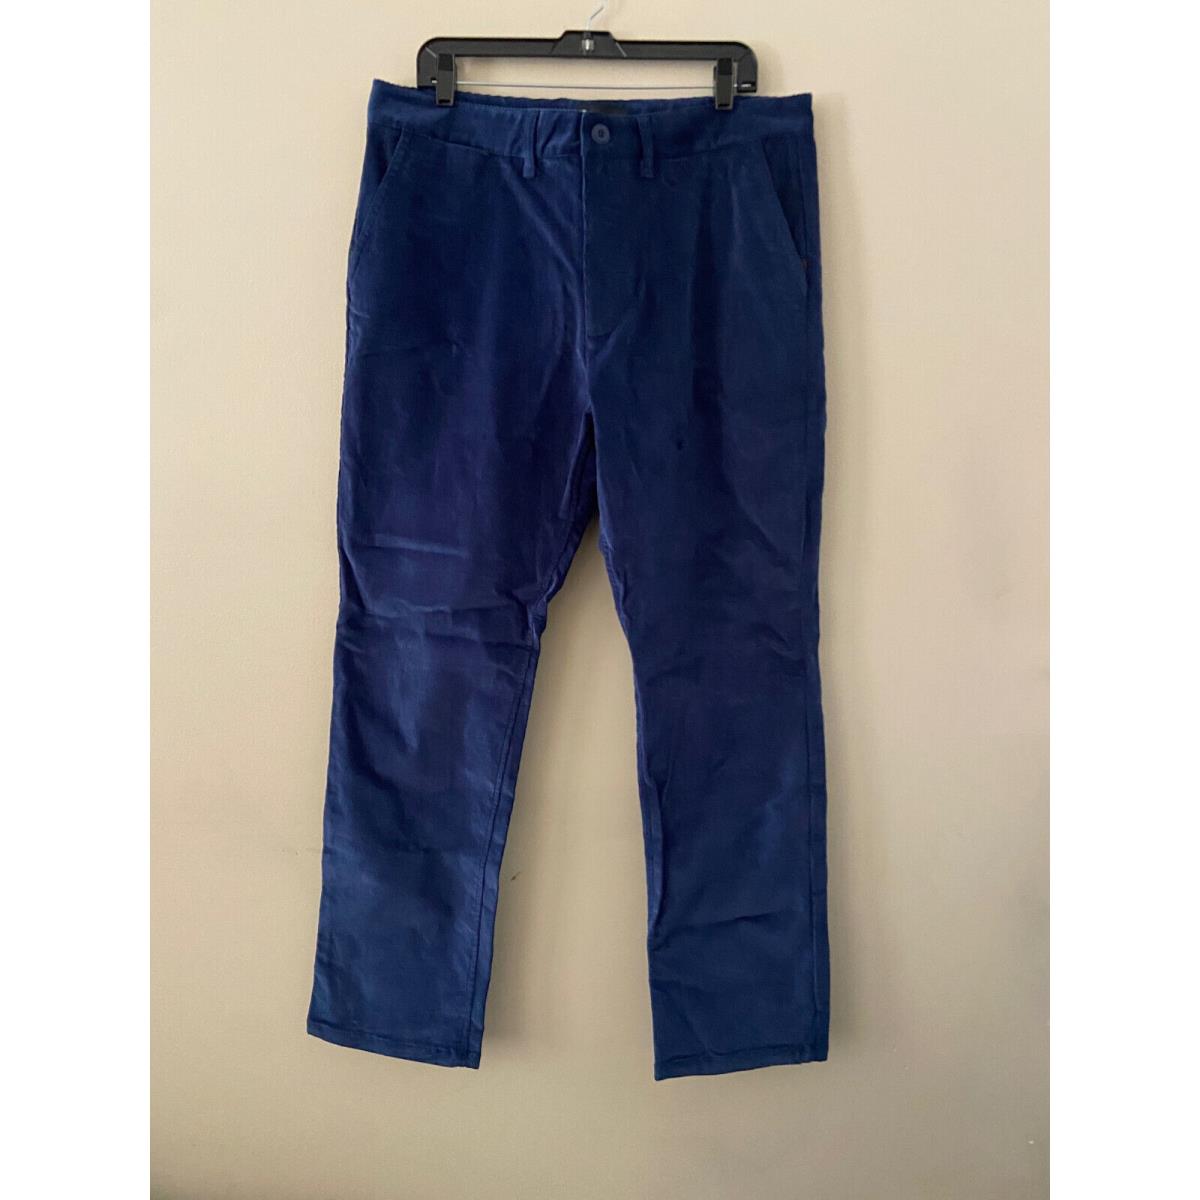 Nike SB Corduroy Skate Trousers Pants Navy Blue CK7287-410 Mens Size 36